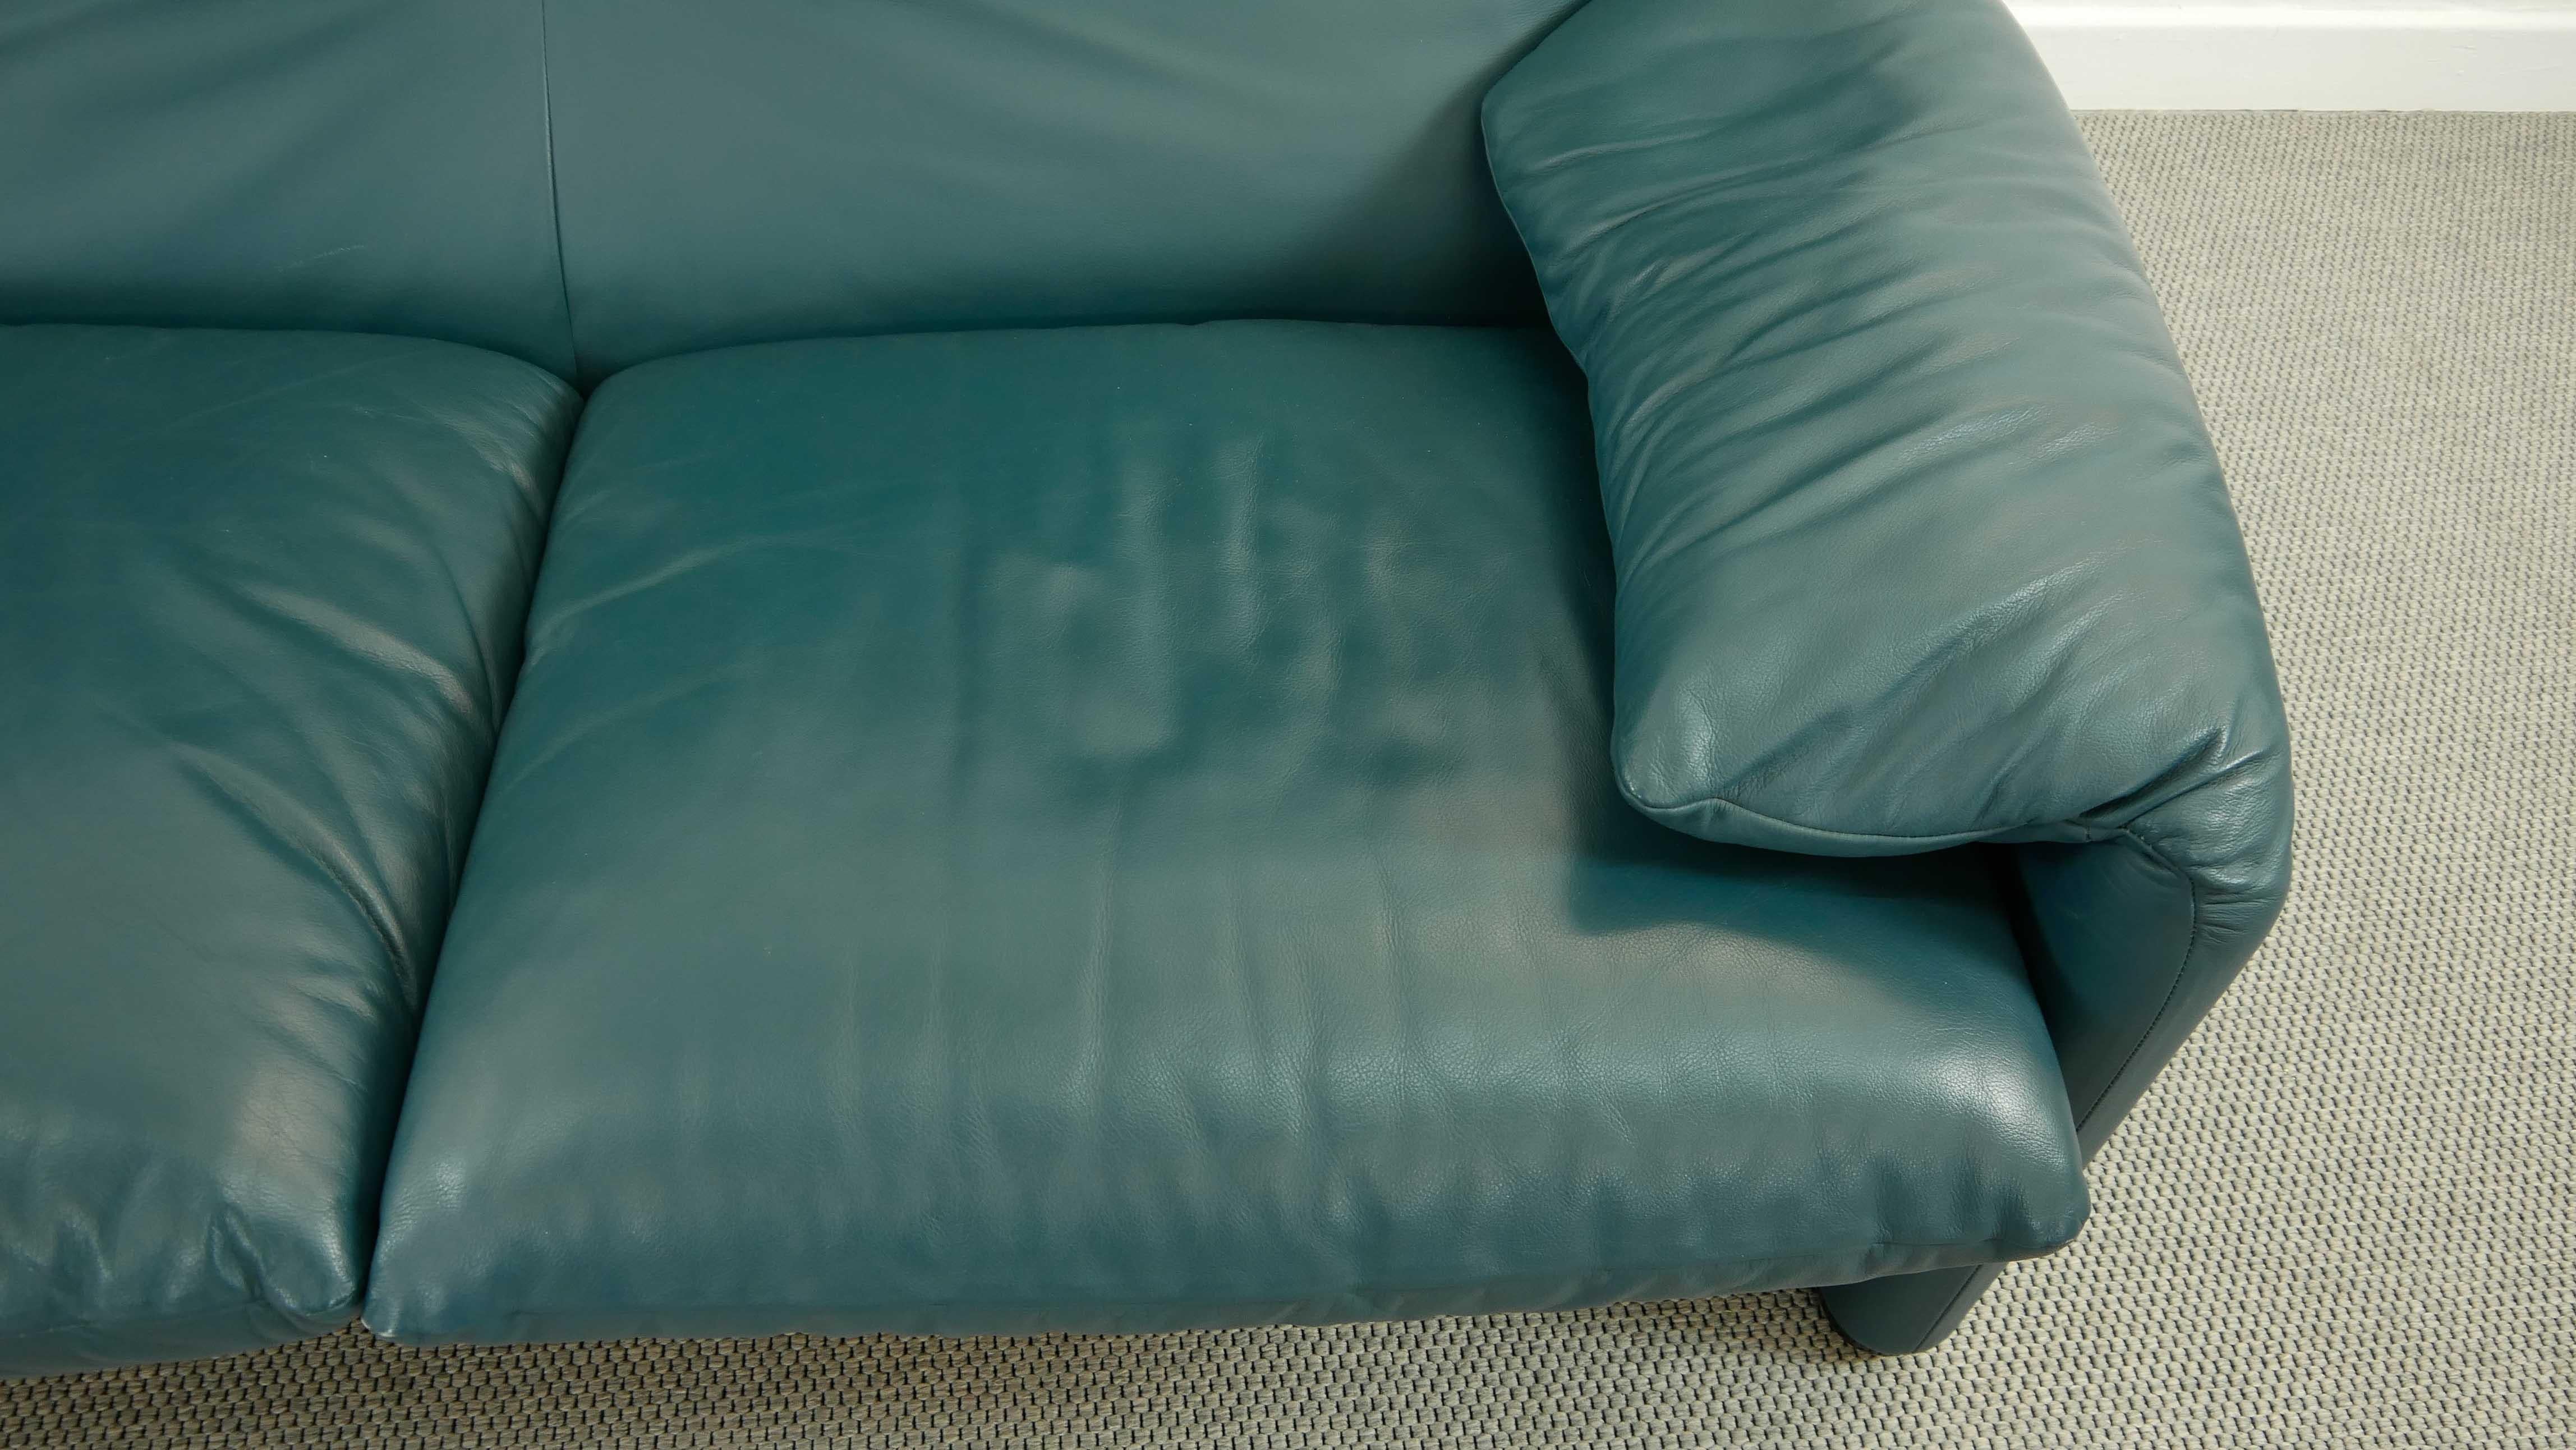 Cassina Maralunga 3-Seat Sofa by Vico Magistretti in Petrol-Darkgreen Leather 6